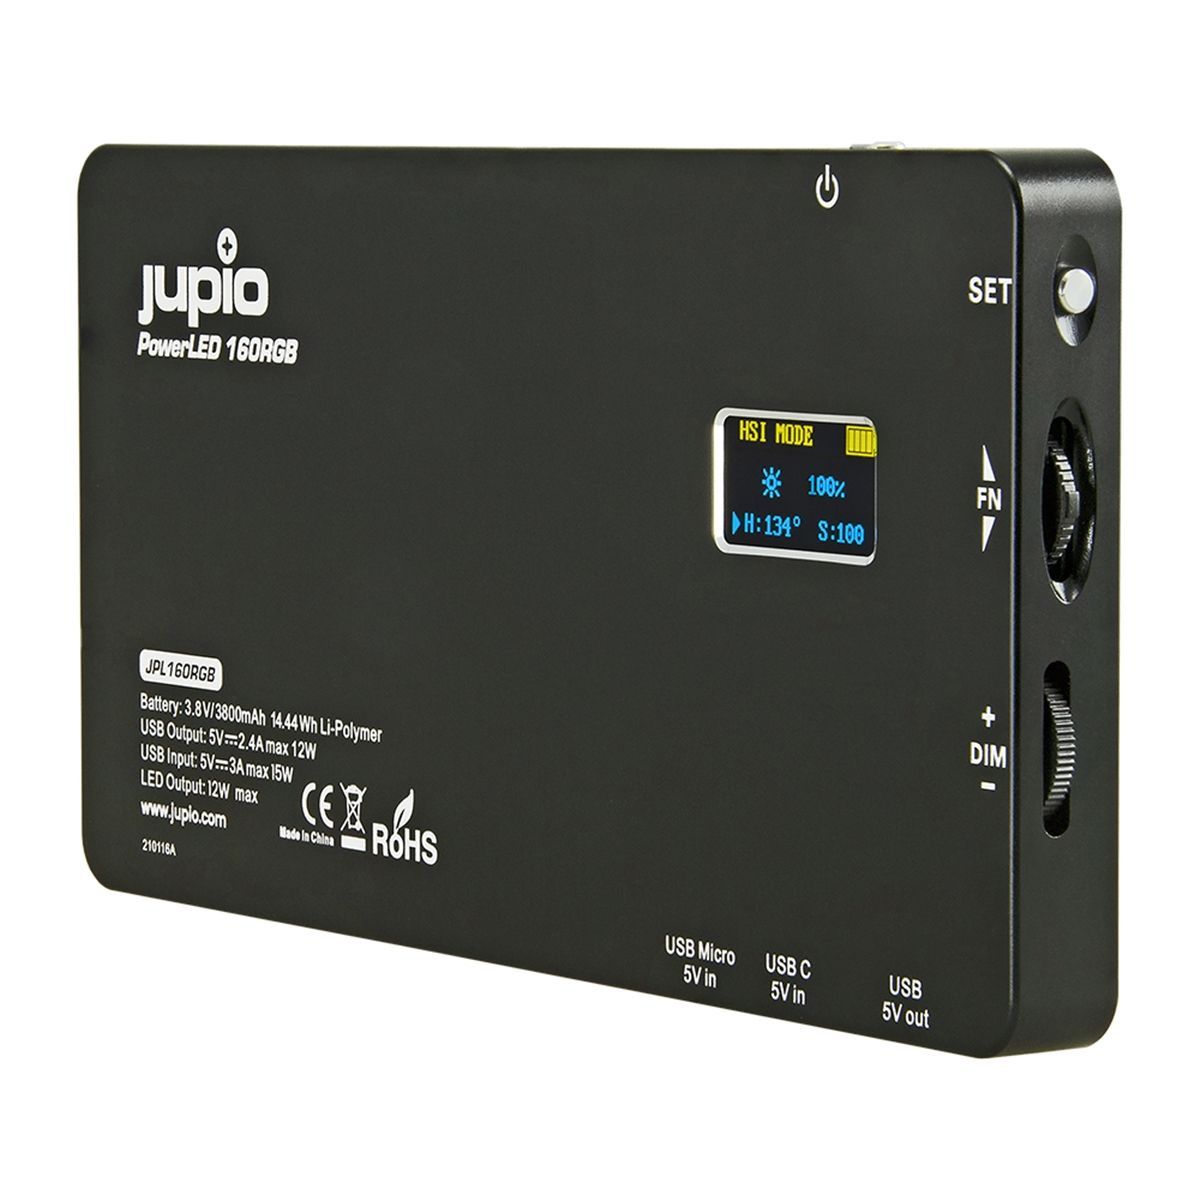 Jupio Power LED 160 RGB + beépített PowerVault funkcióval